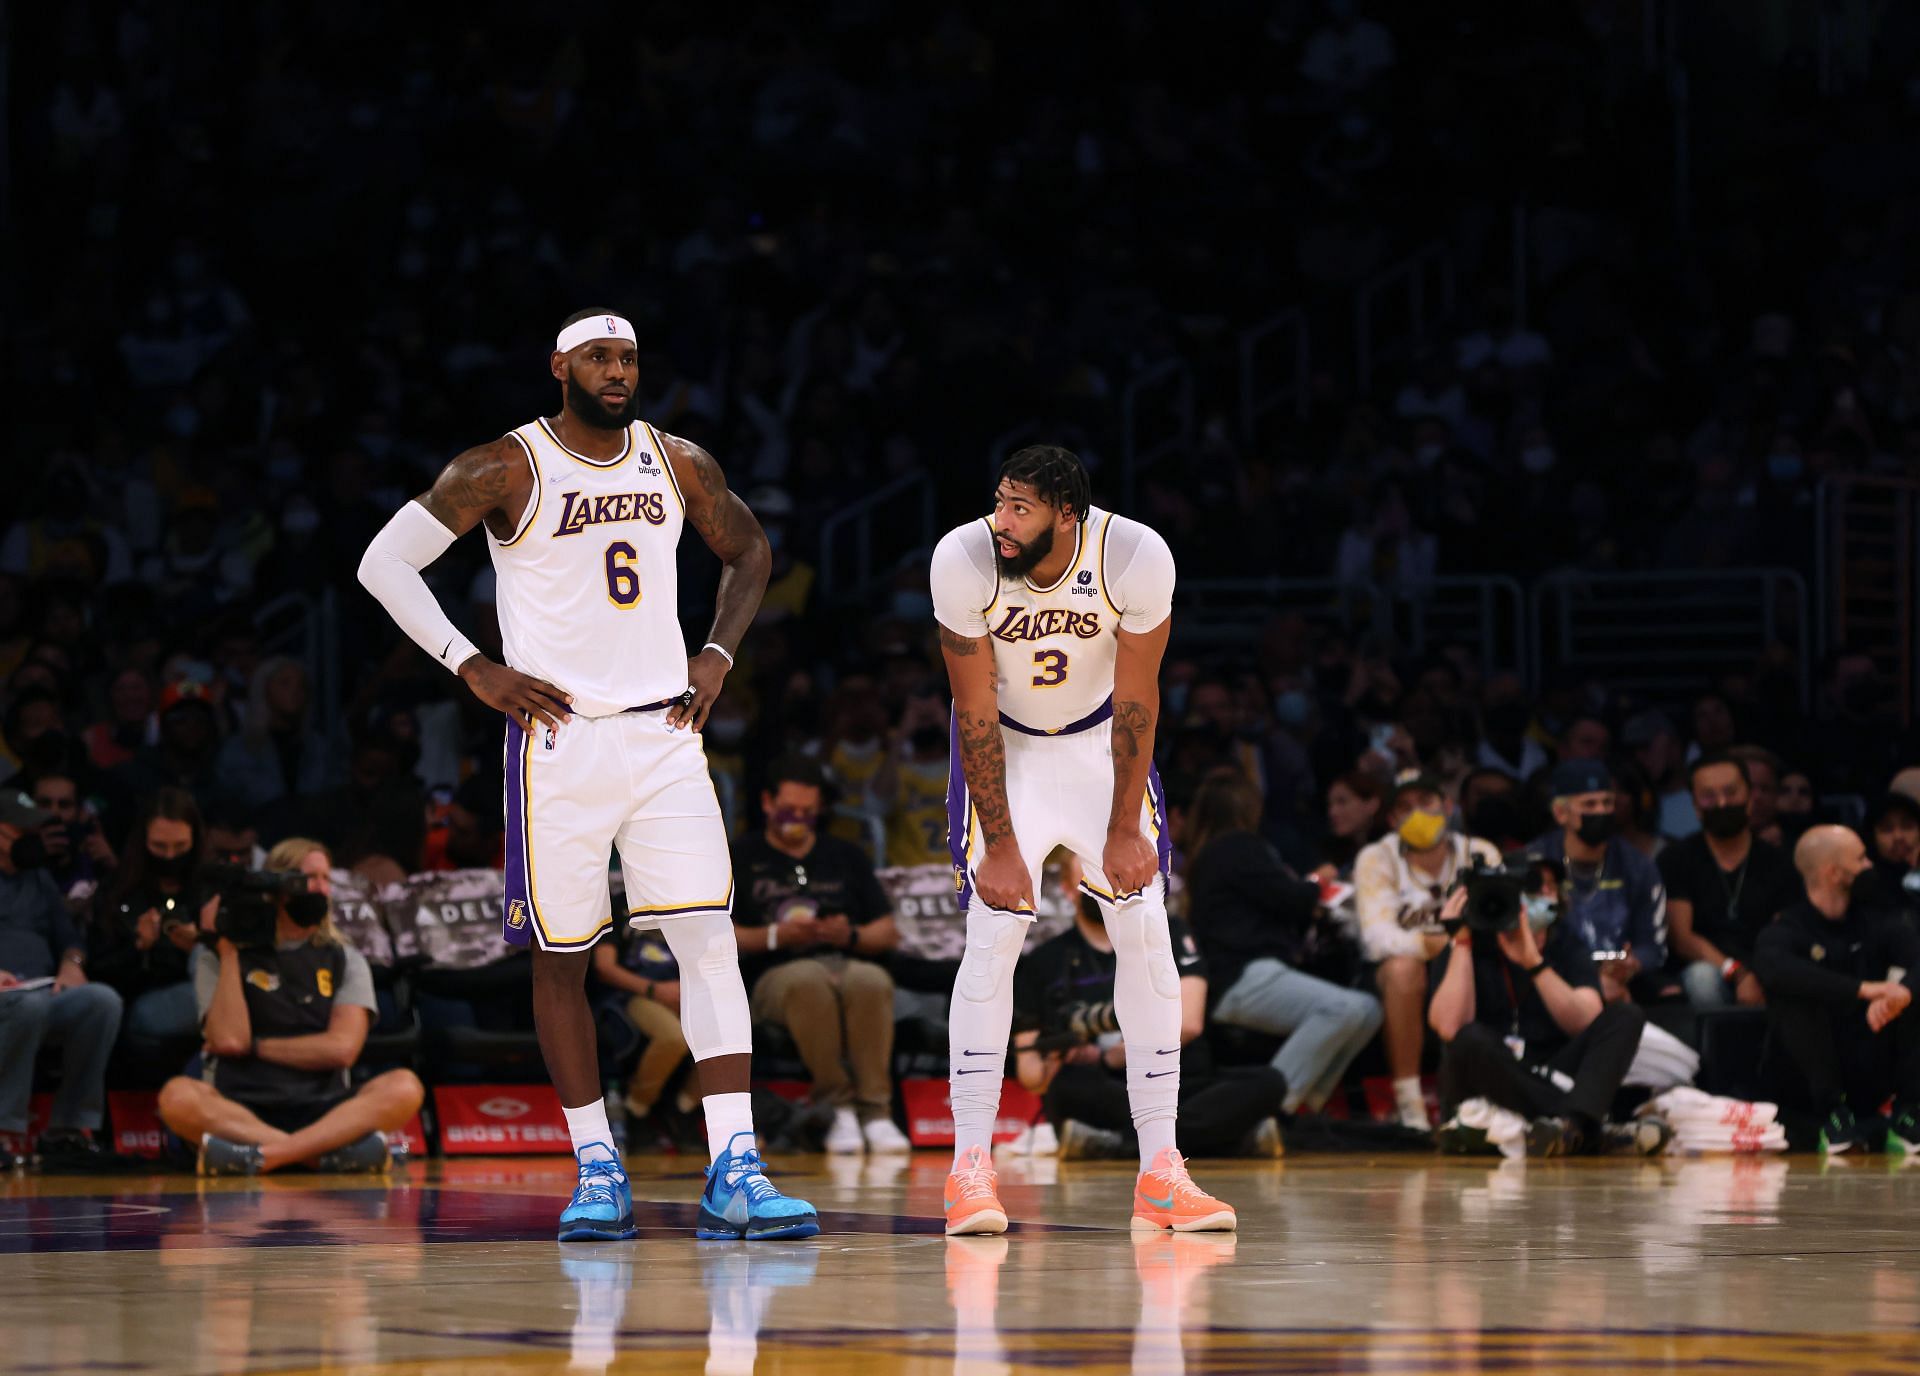 Lakers superstars LeBron James and Anthony Davis